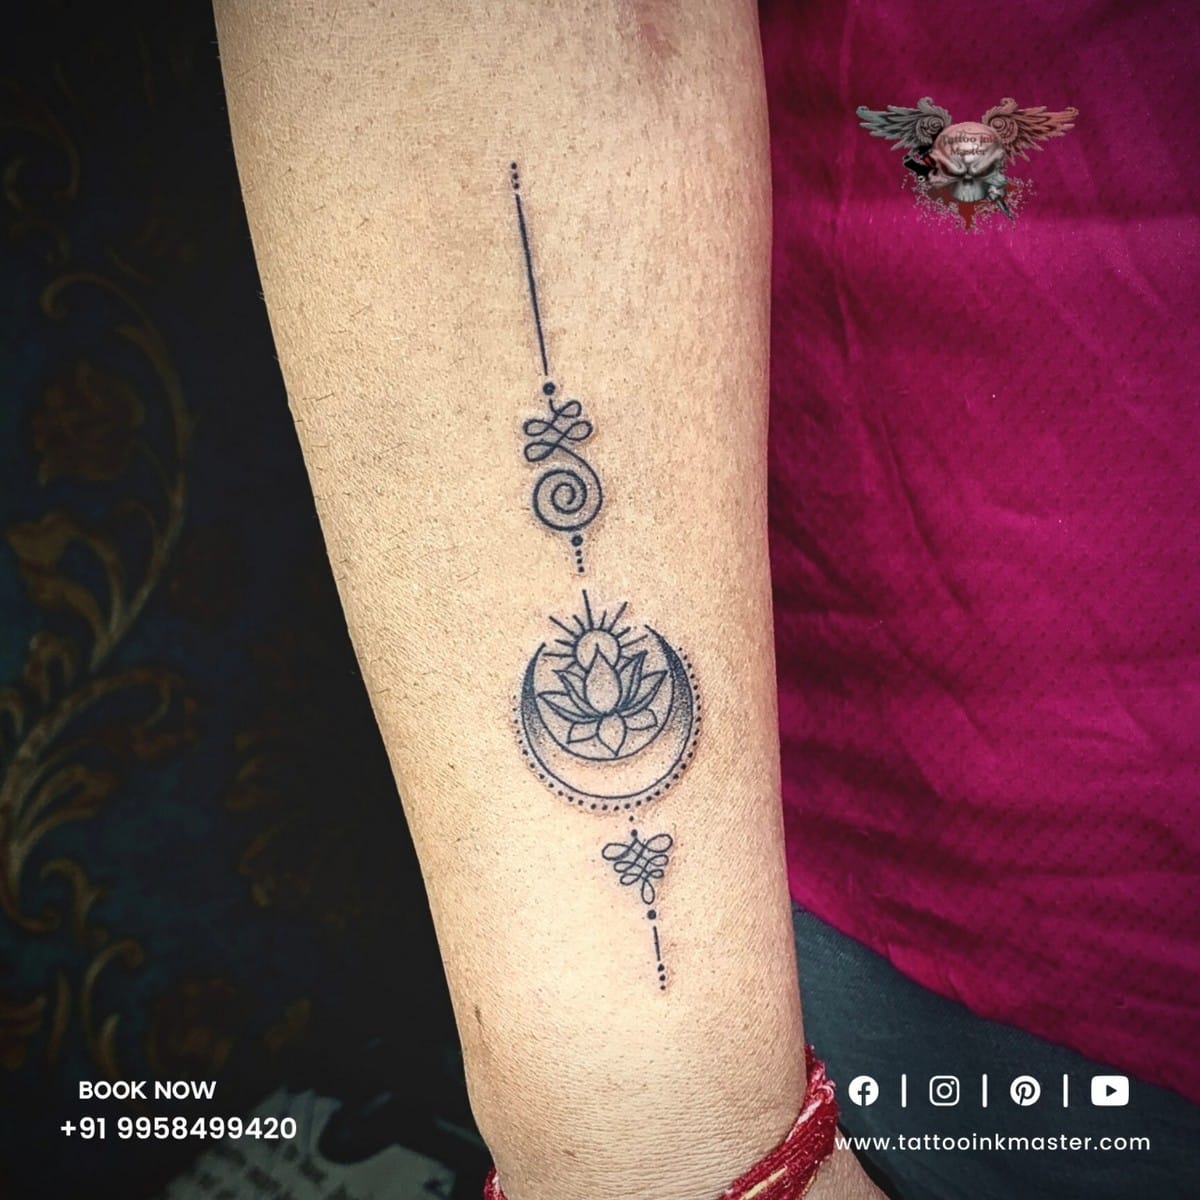 Beautiful Designer Tattoo With Sun and Lotus | Tattoo Ink Master